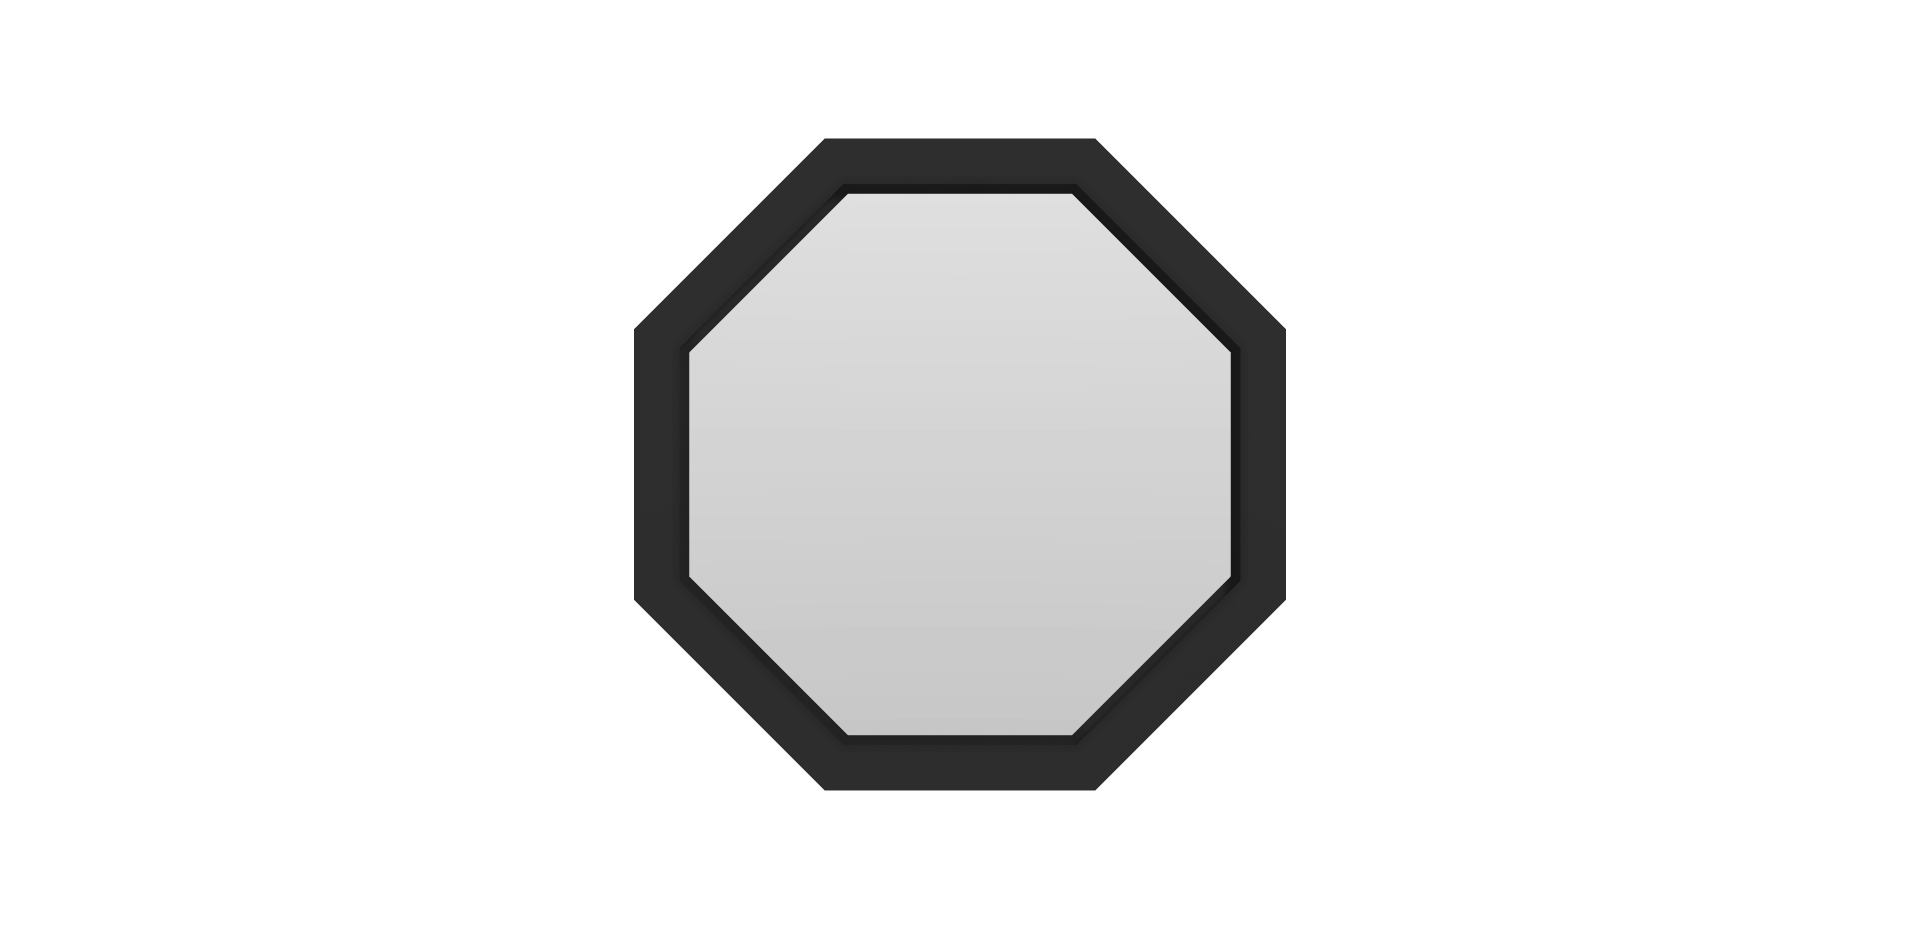 Octagonal 2 Window (fixed) - (Black outside/white inside)